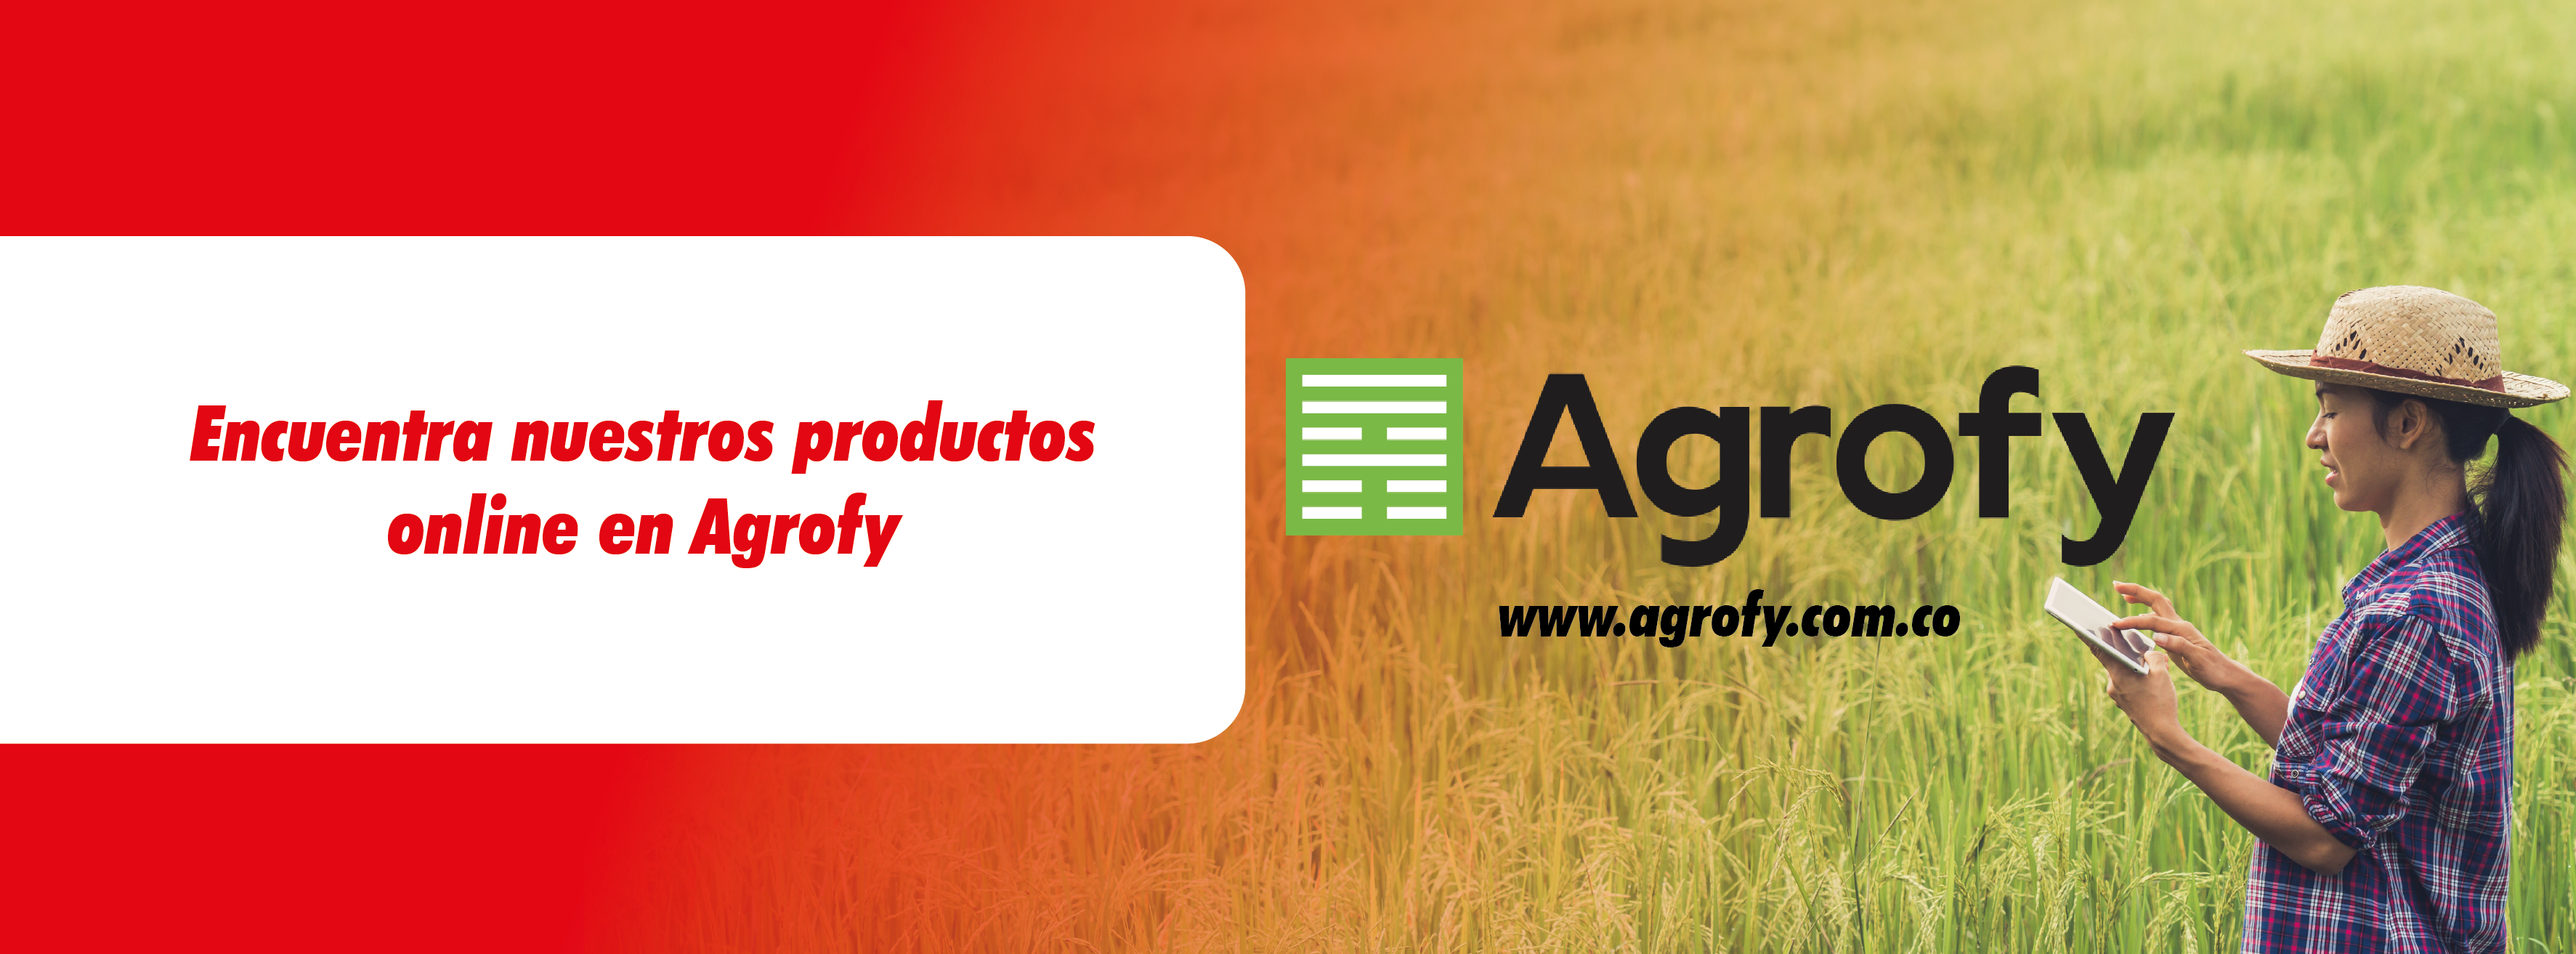 Agrofy